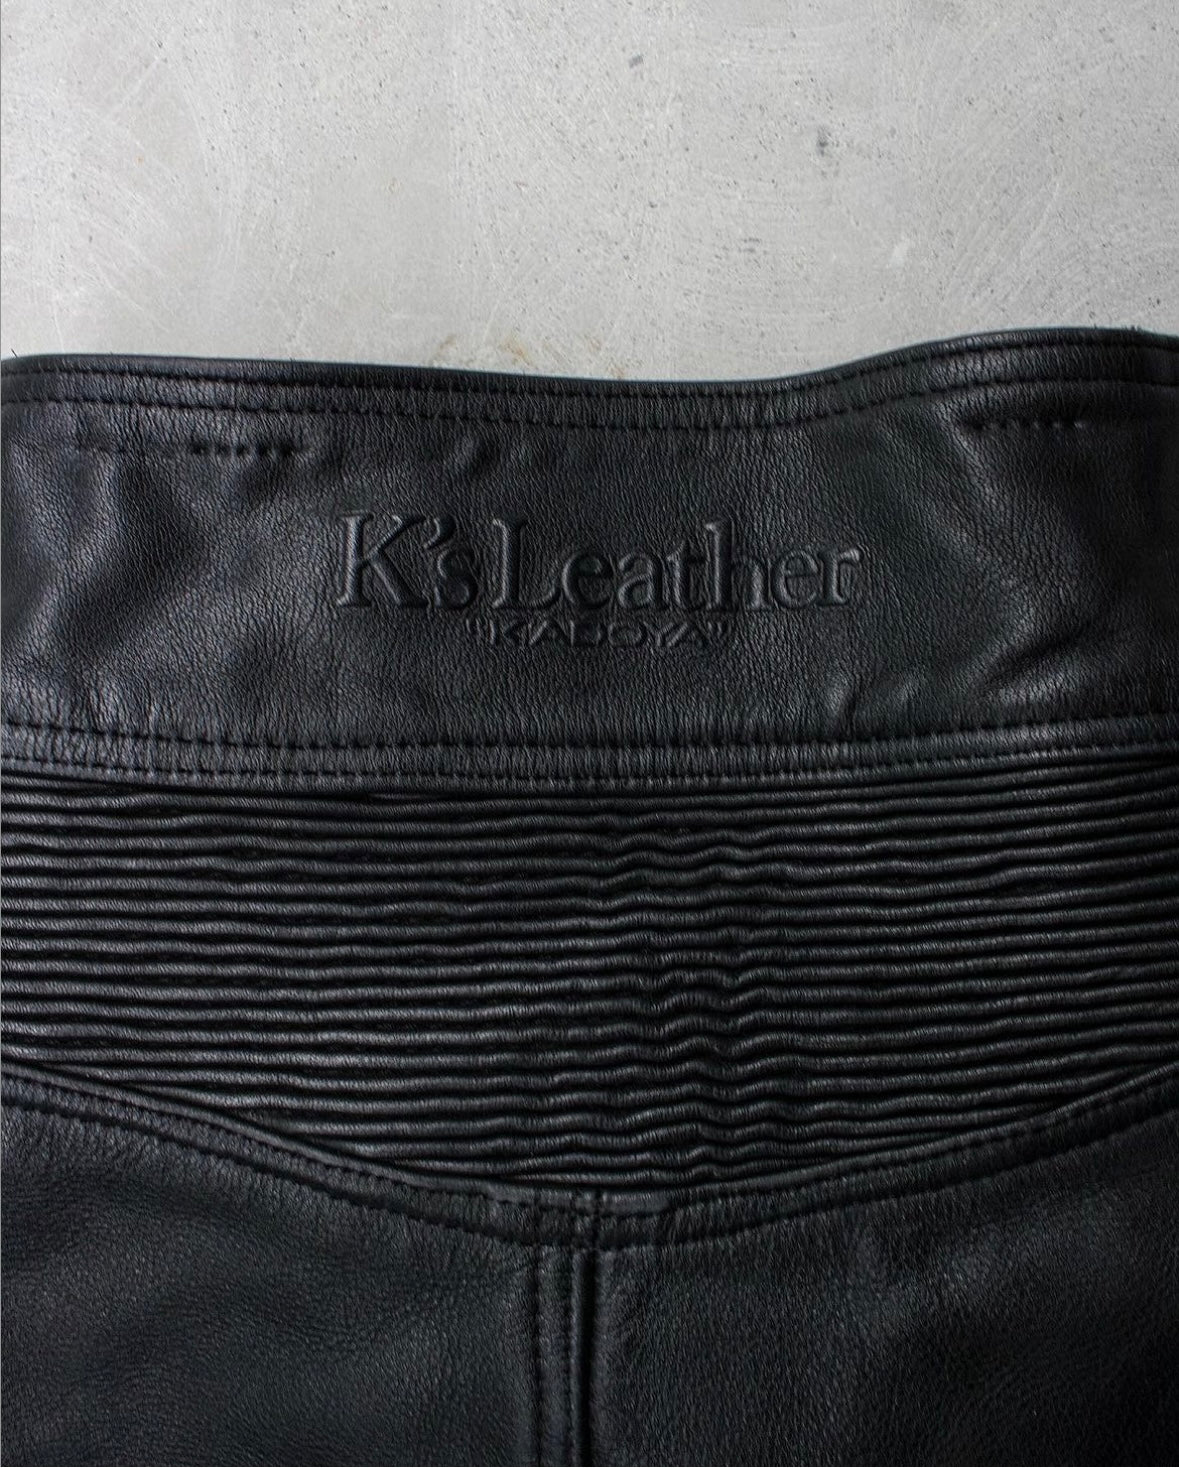 Kadoya K’s Leather 00s Goatskin Padded Motorcycle Pants